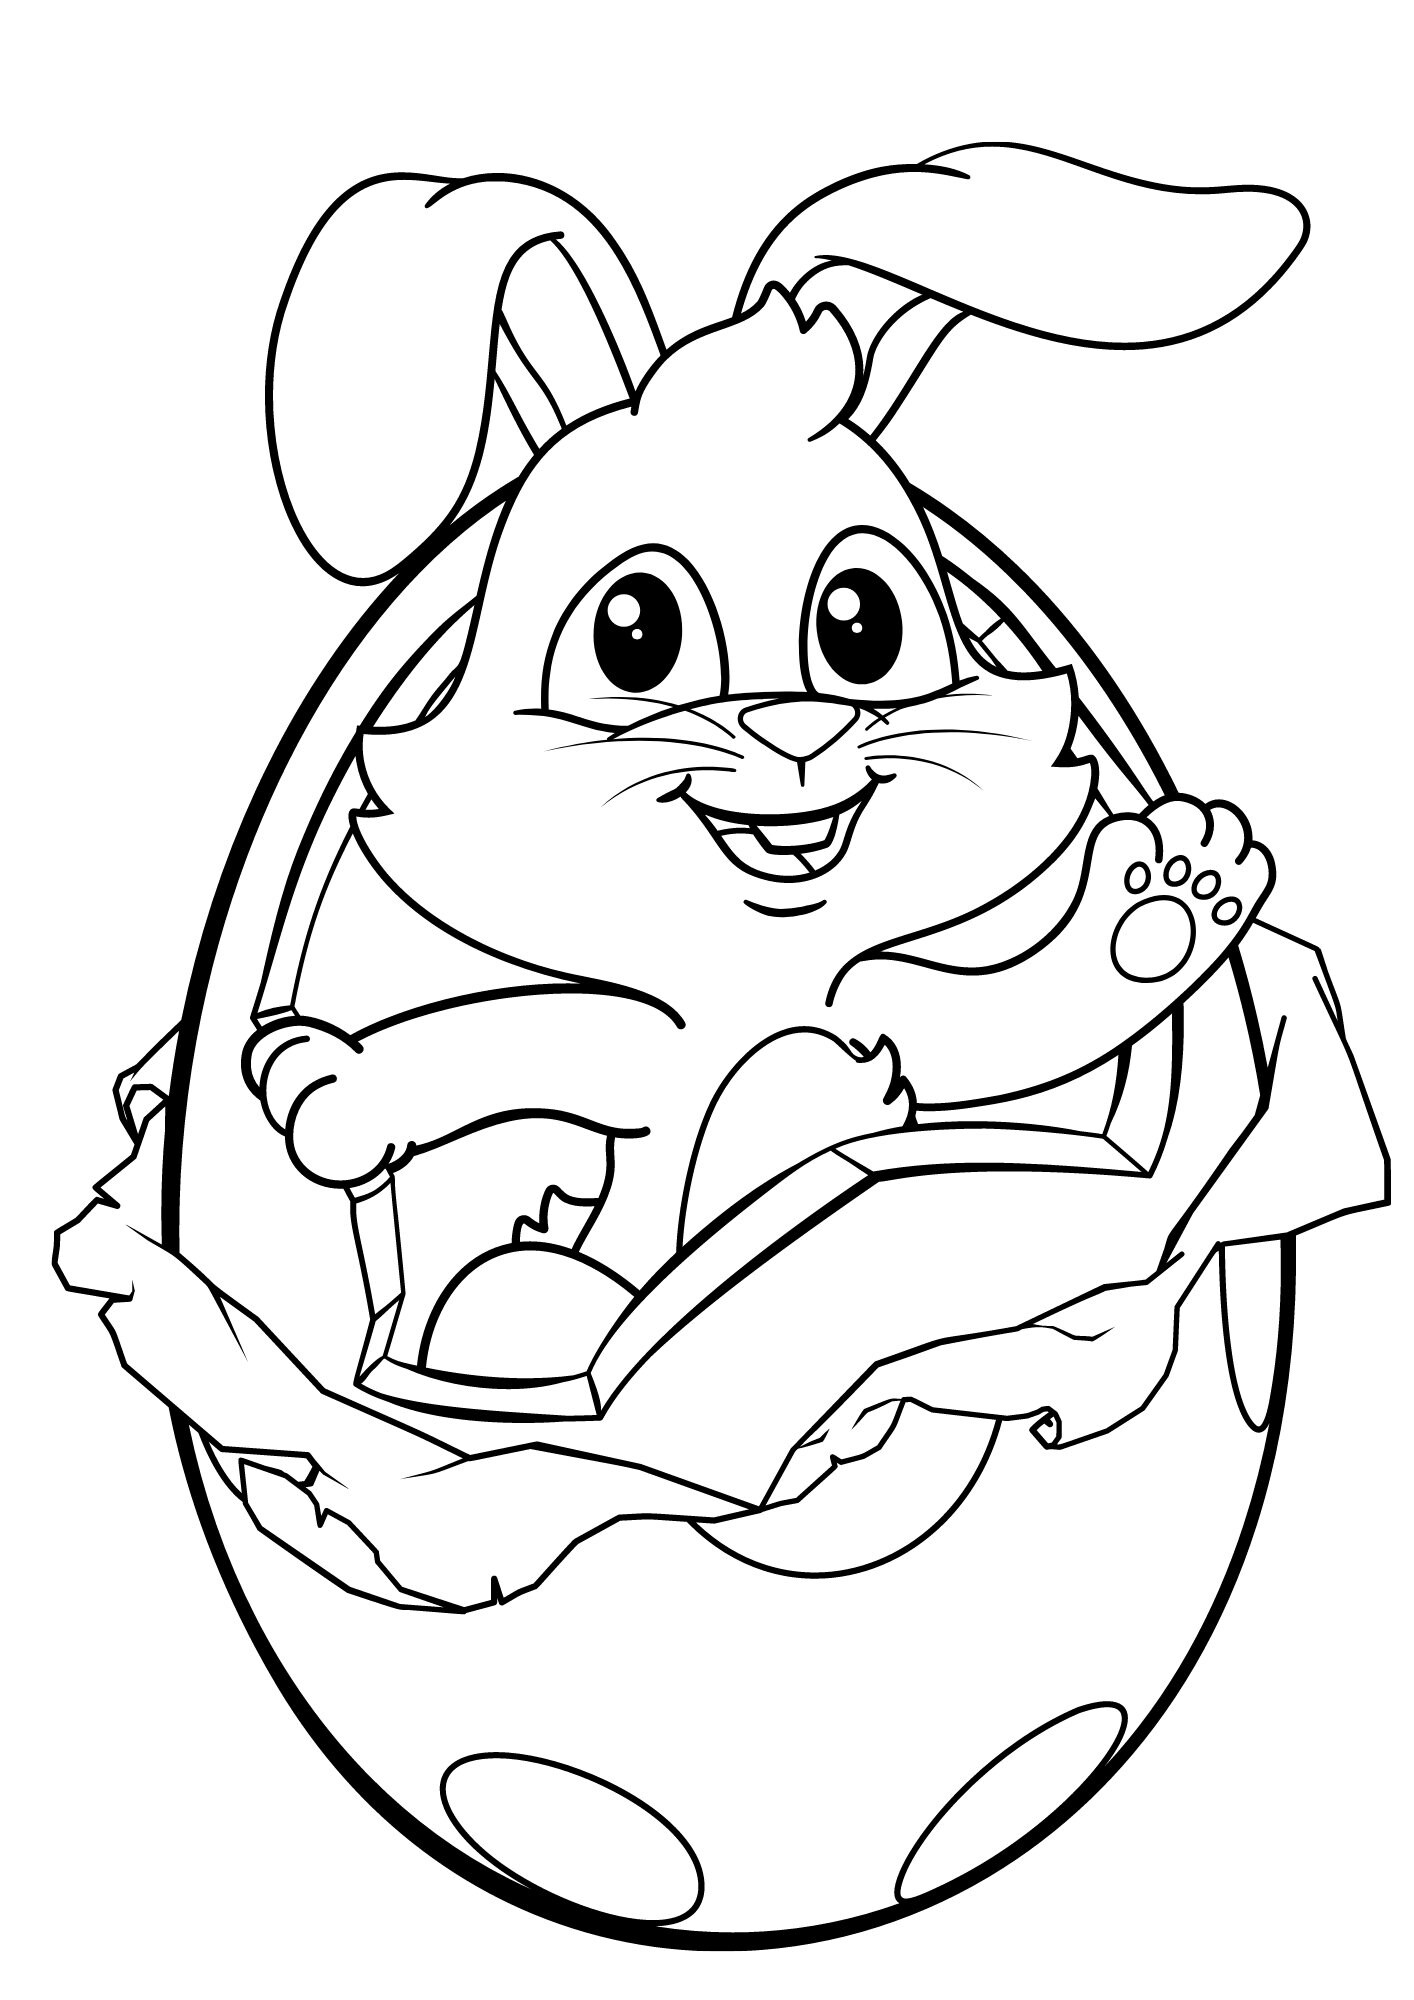 Easter coloring pages printable peeps coloring pages easter activities easter games easter coloring book digital